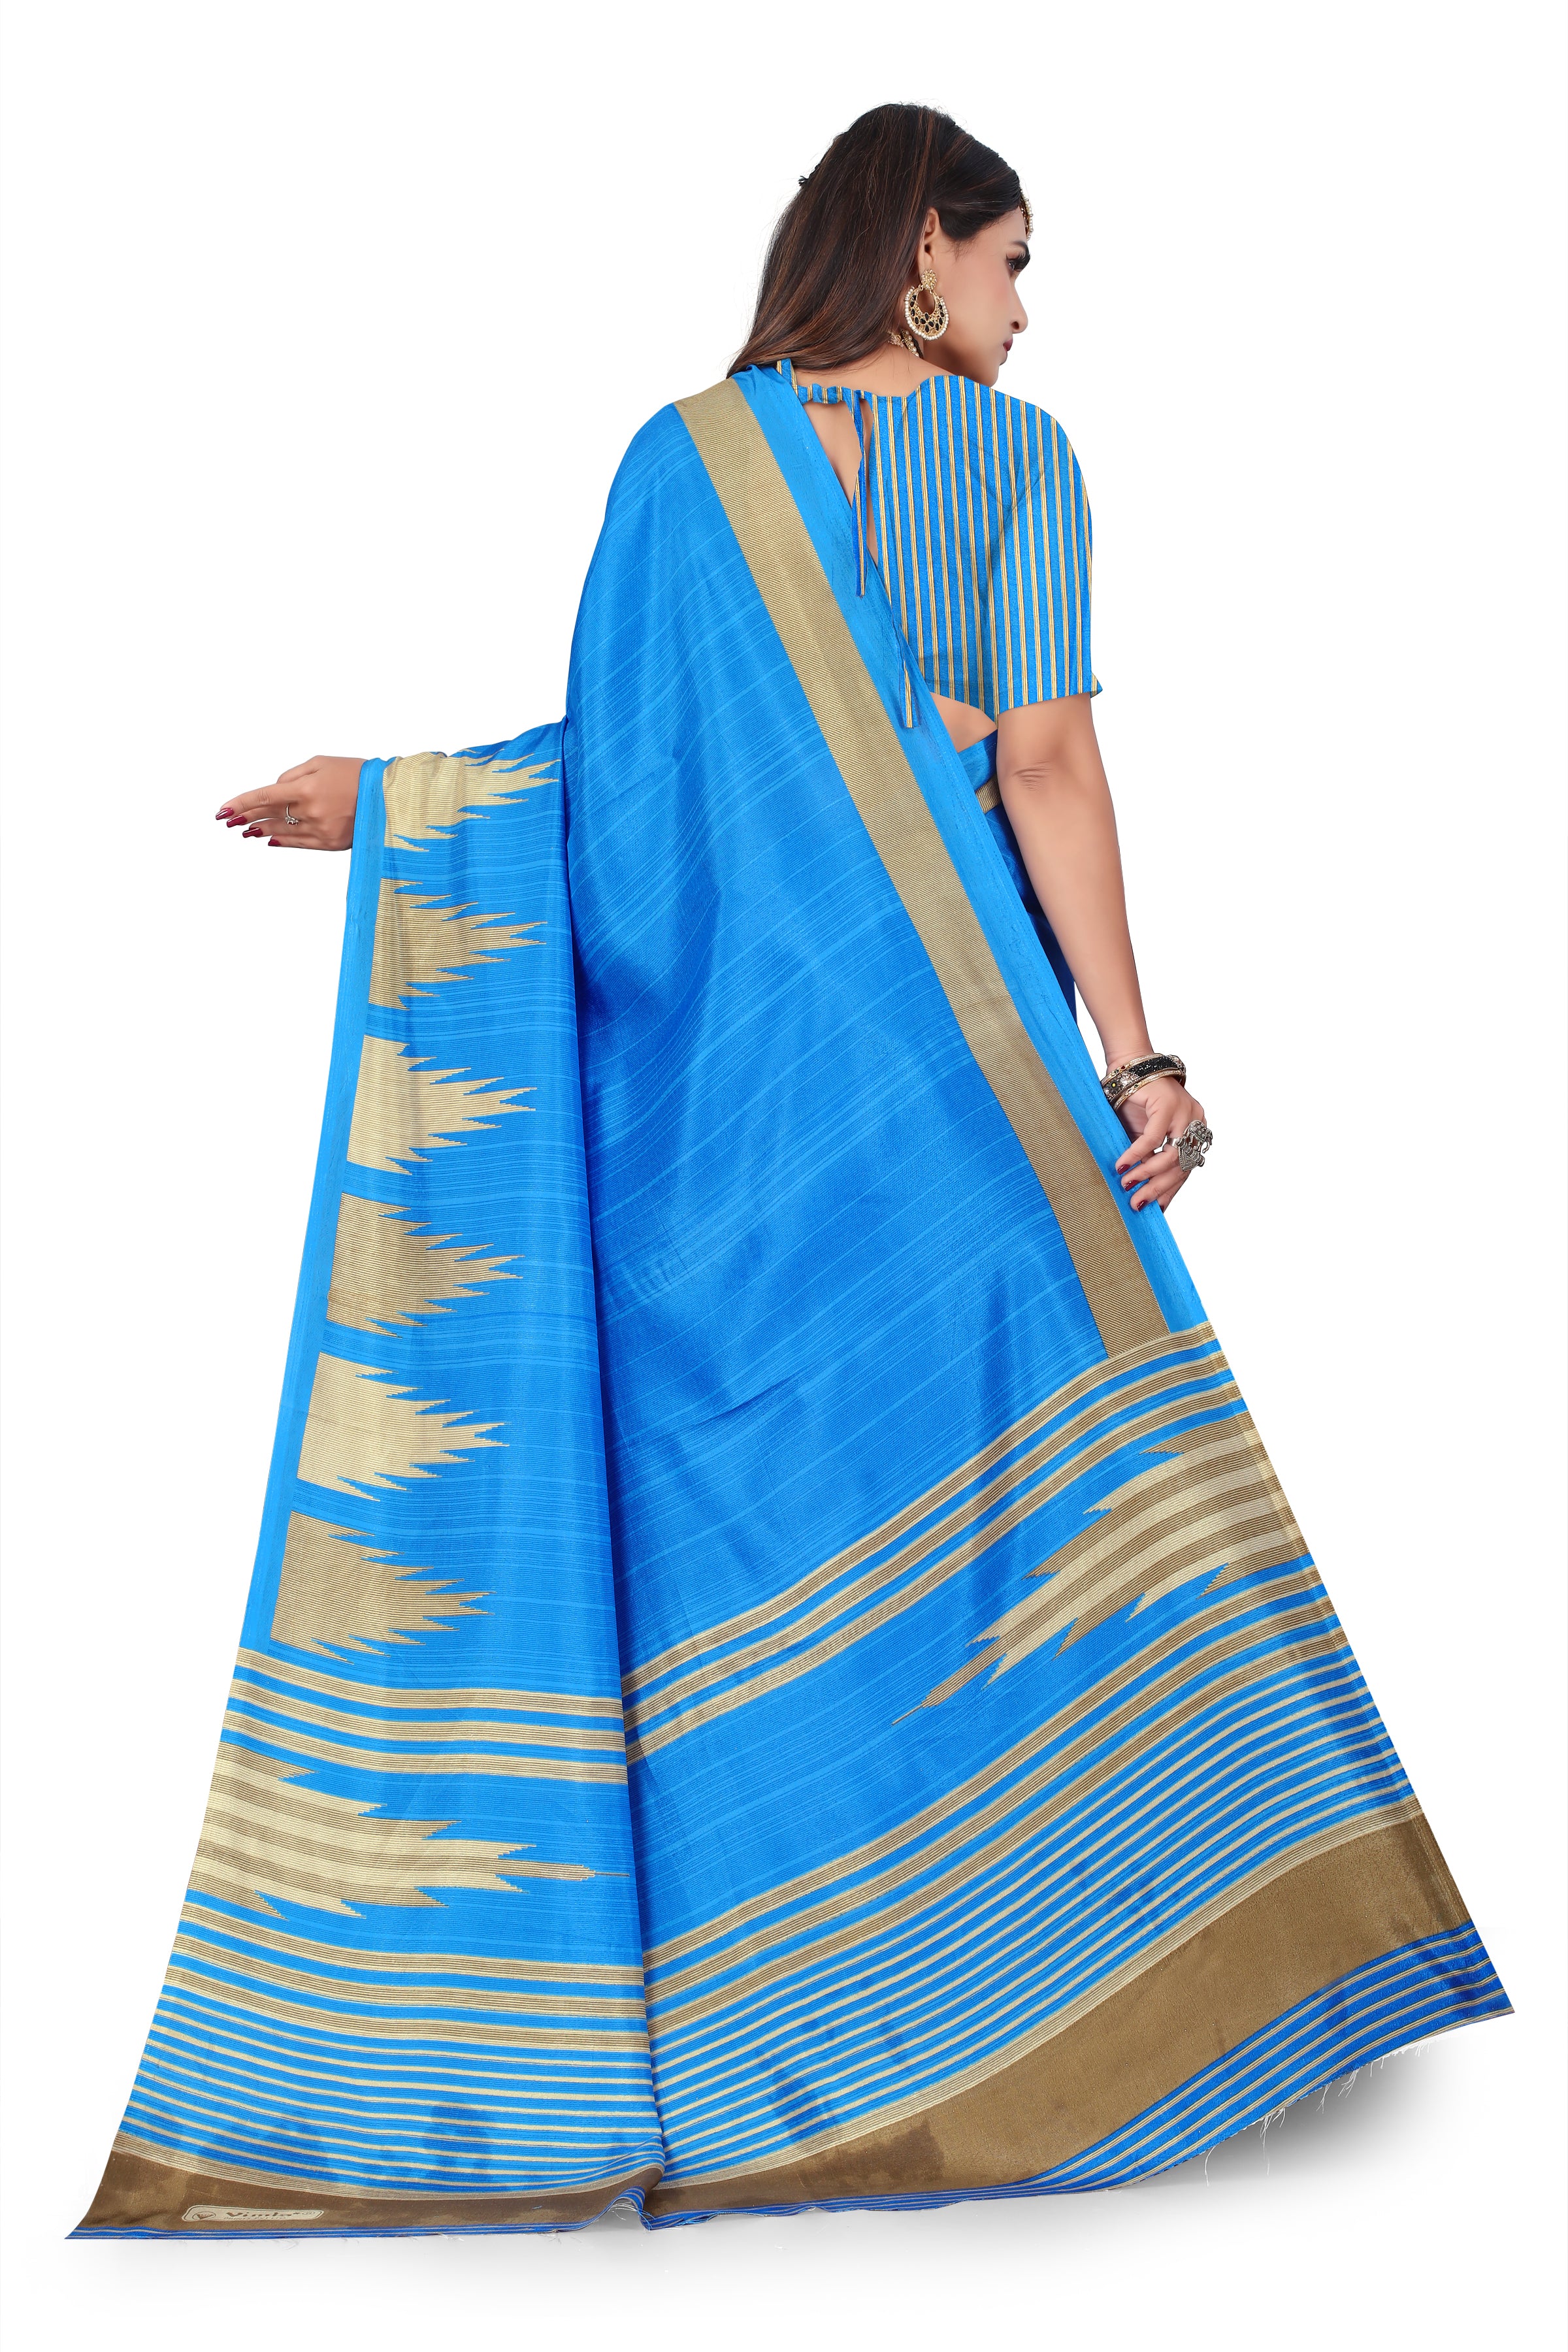 Vimla Prints Women's Blue Malgudi Art Silk Uniform Saree with Blouse Piece (2448_24)